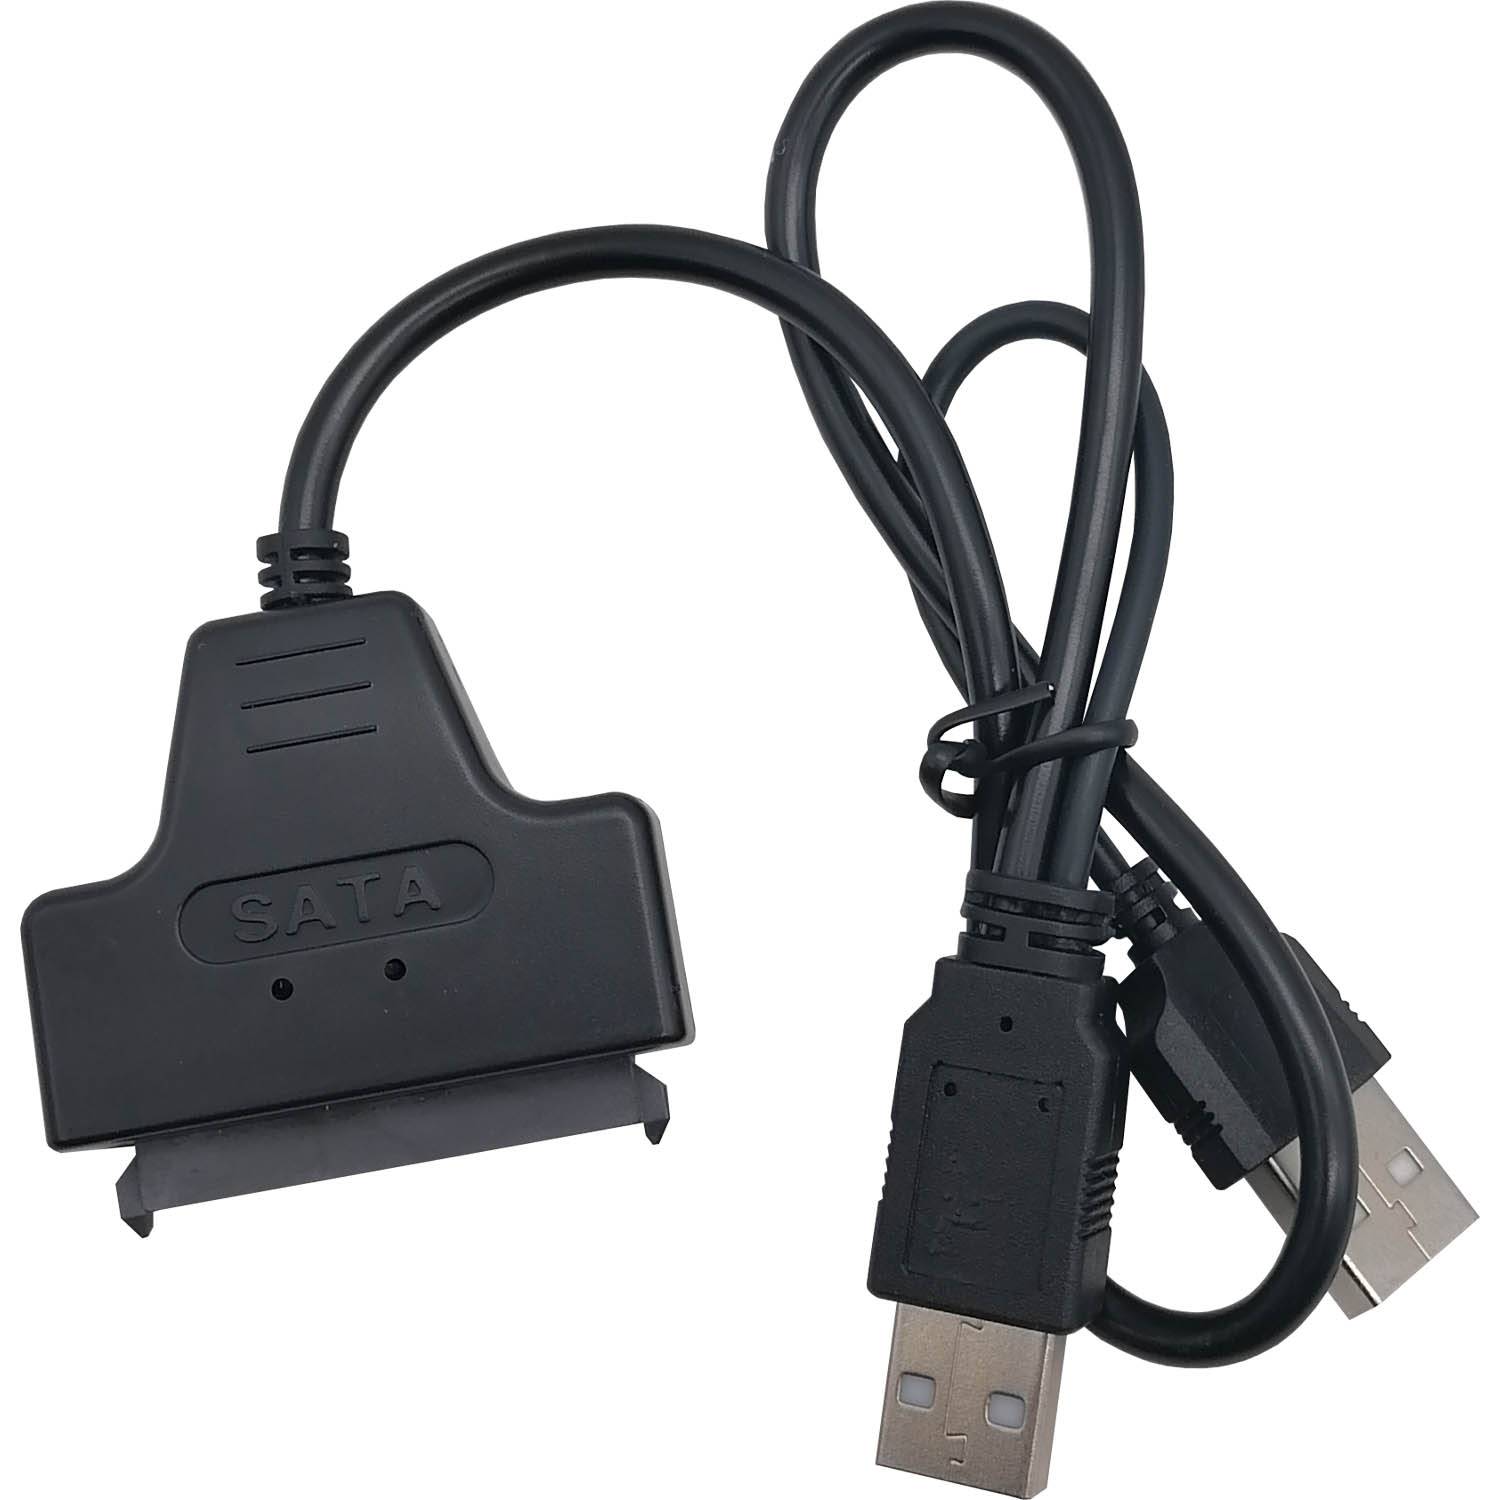 Адаптер-переходник USB 3.0 - SATA 7+15 pin для HDD/SSD